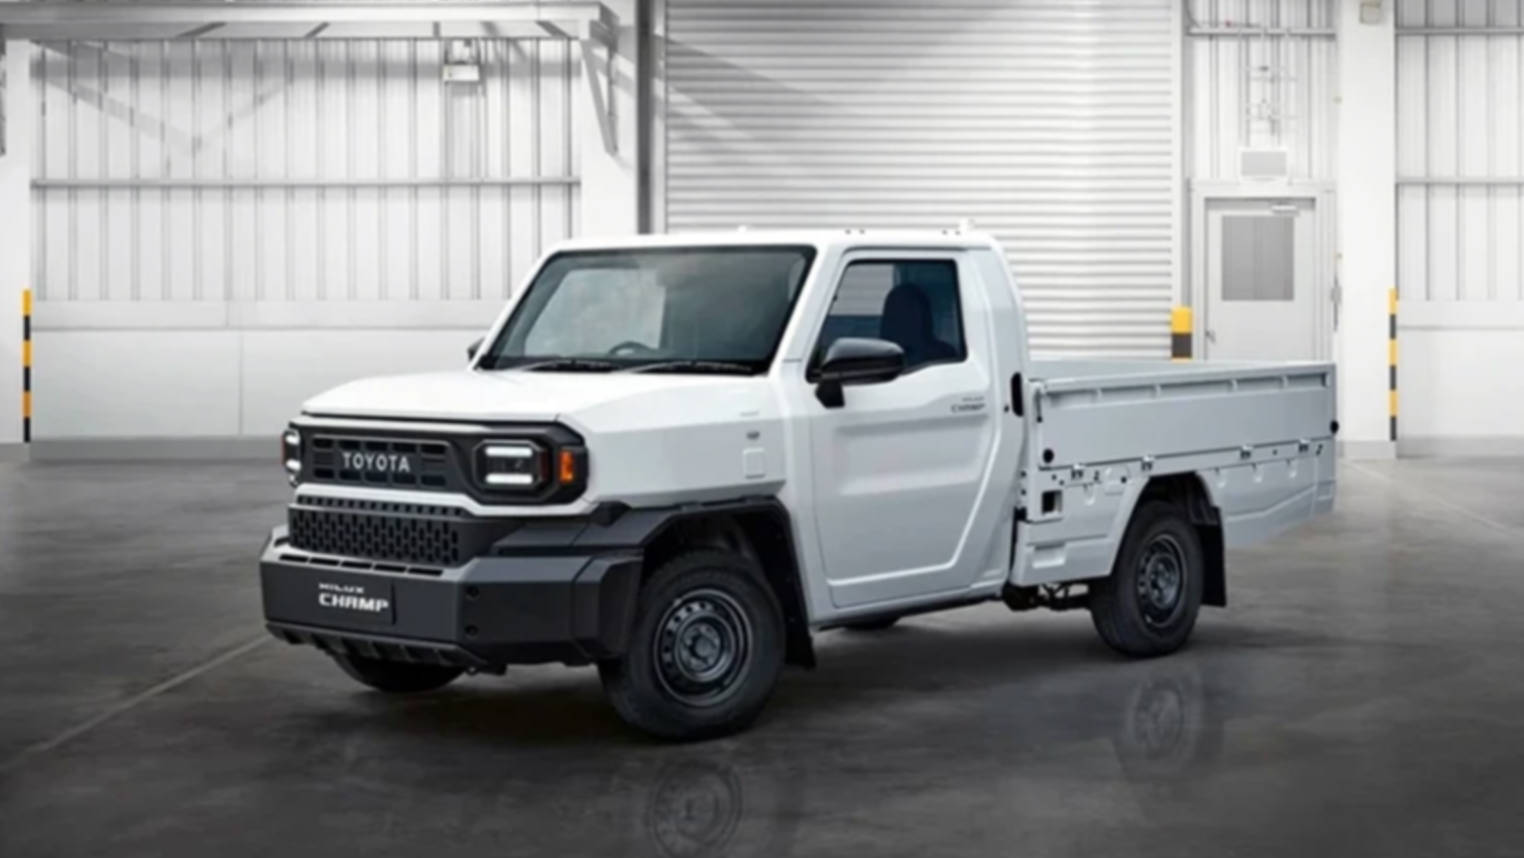 New Toyota Hilux Champ Makes Global Debut: The Utilitarian & Modular Workhorse Pickup Truck